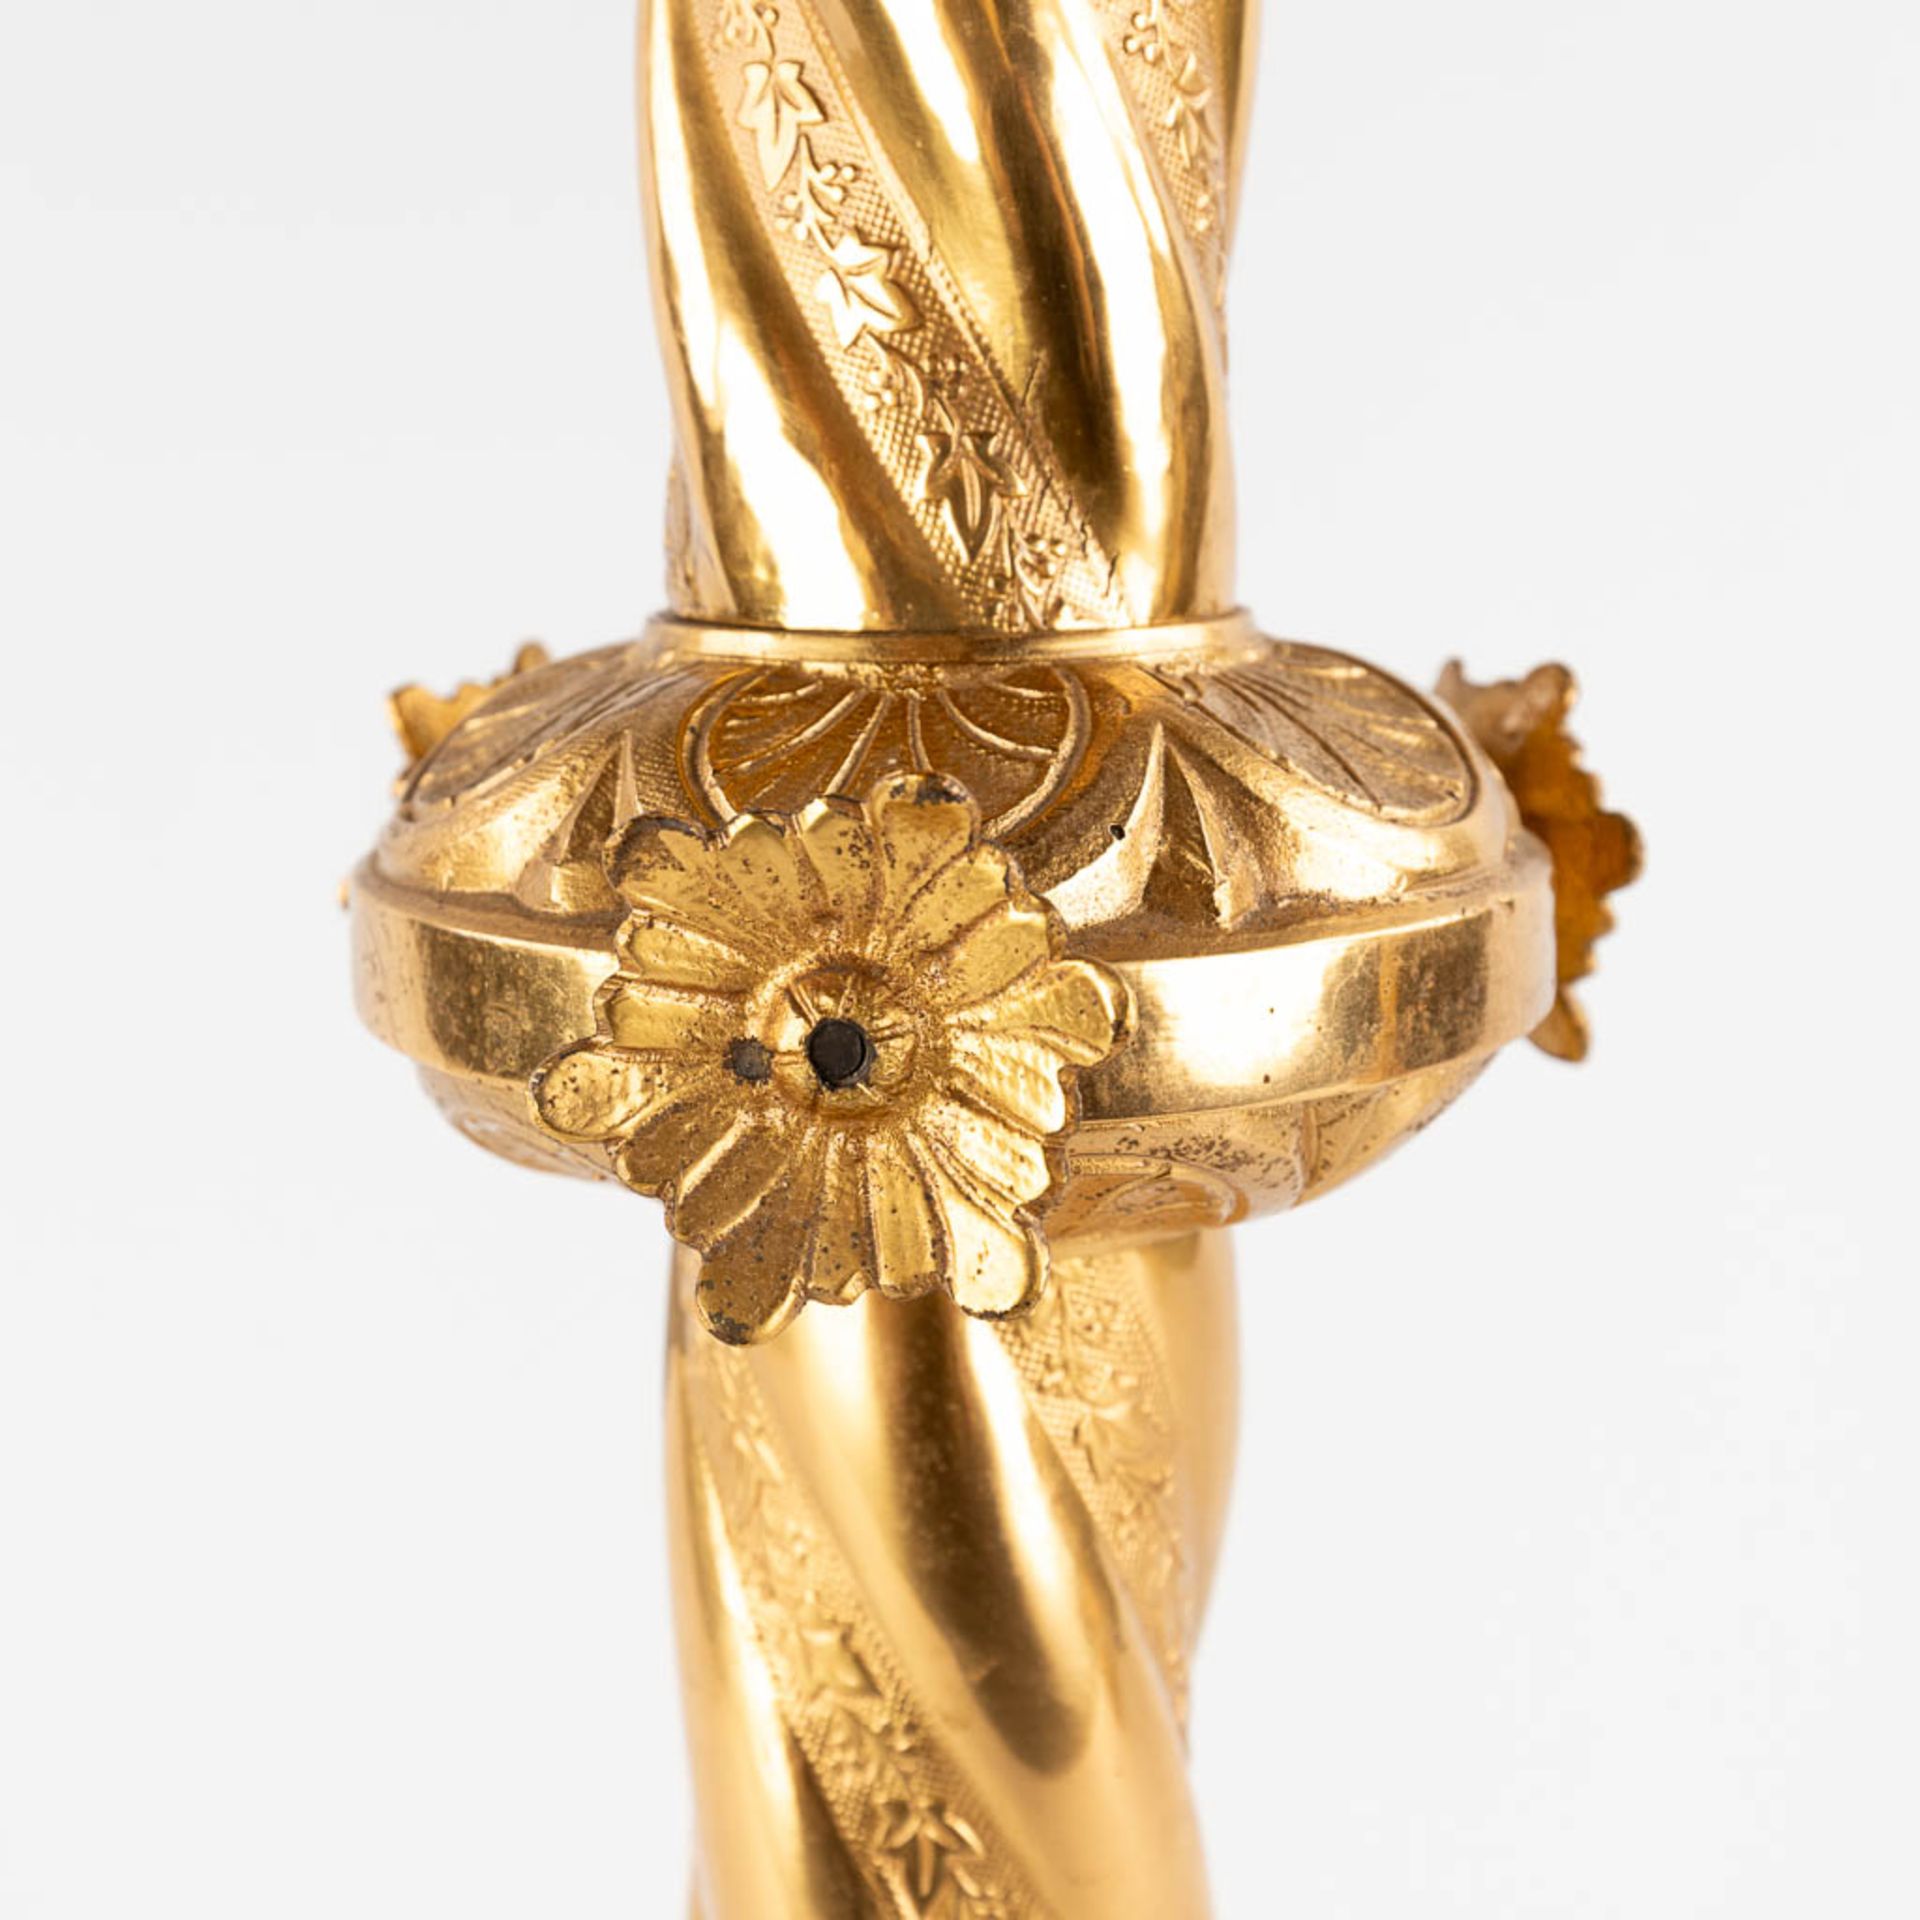 A pair of church candlesticks, gilt metal. (H:70 x D:24 cm) - Image 10 of 15